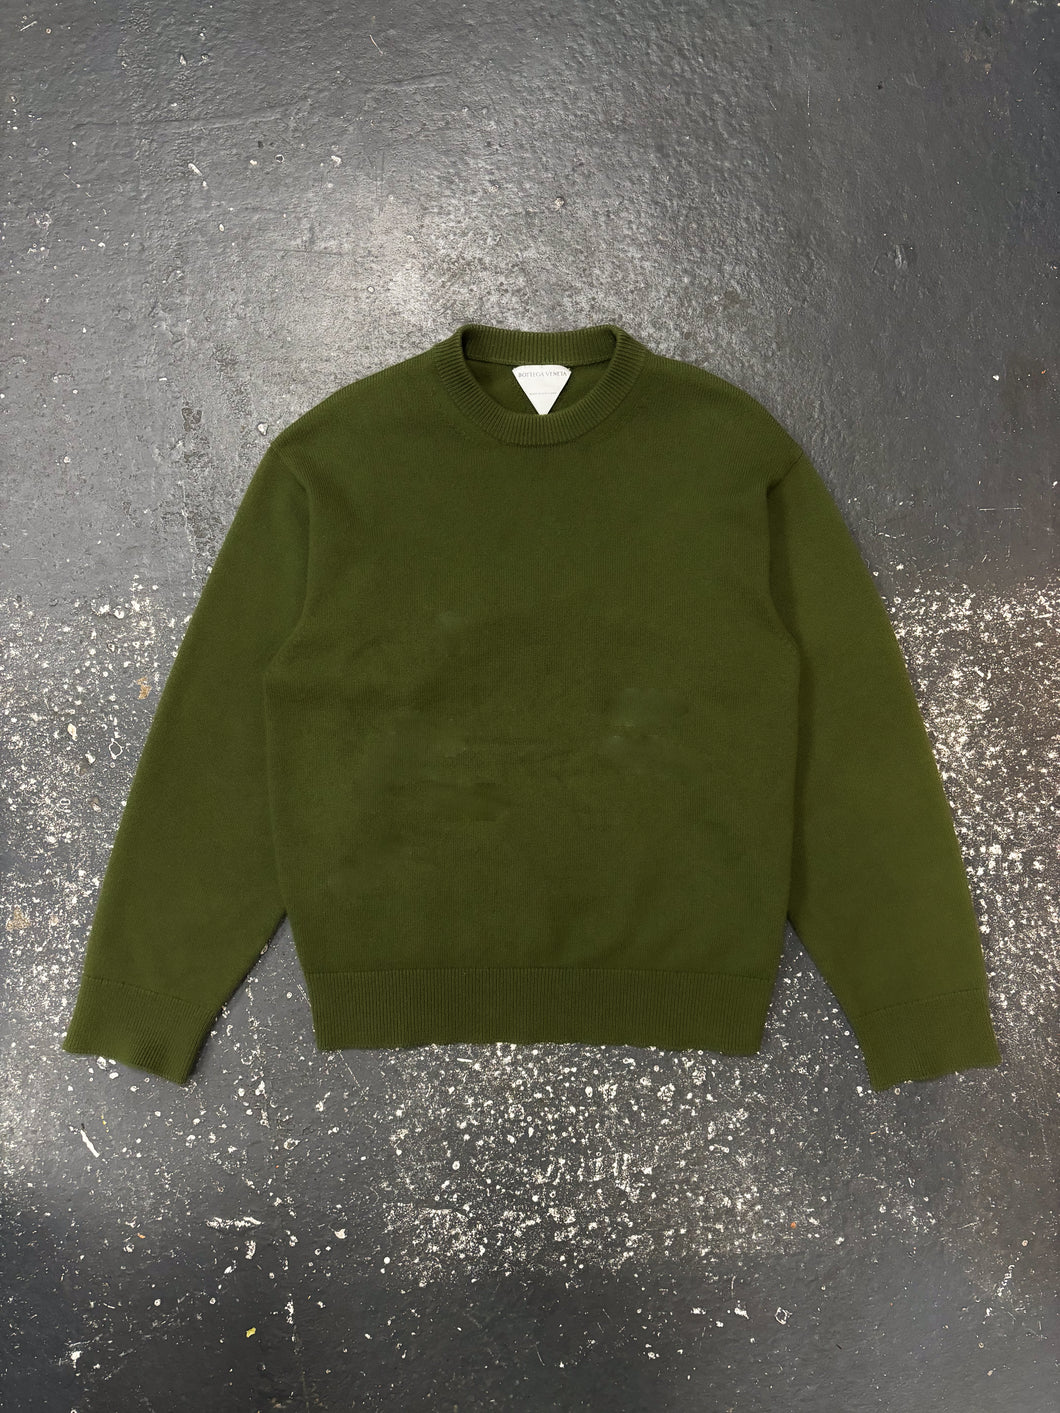 Bottega Veneta Cashmere Sweater (M)